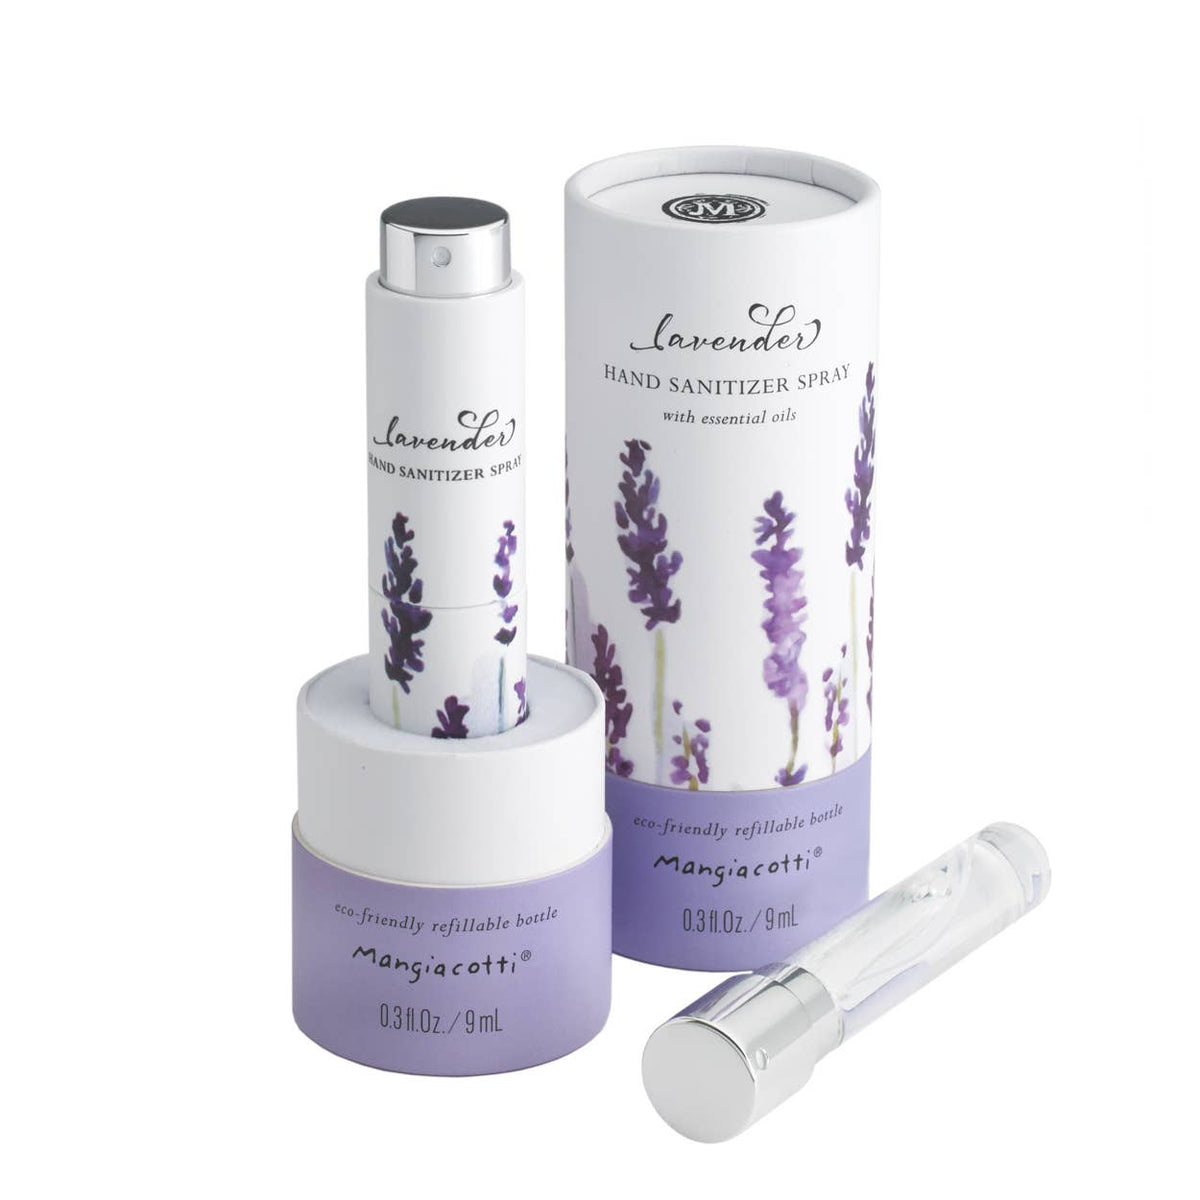 Mangiacotti - NEW! Lavender Twist-Up Refillable Hand Sanitizer Spray